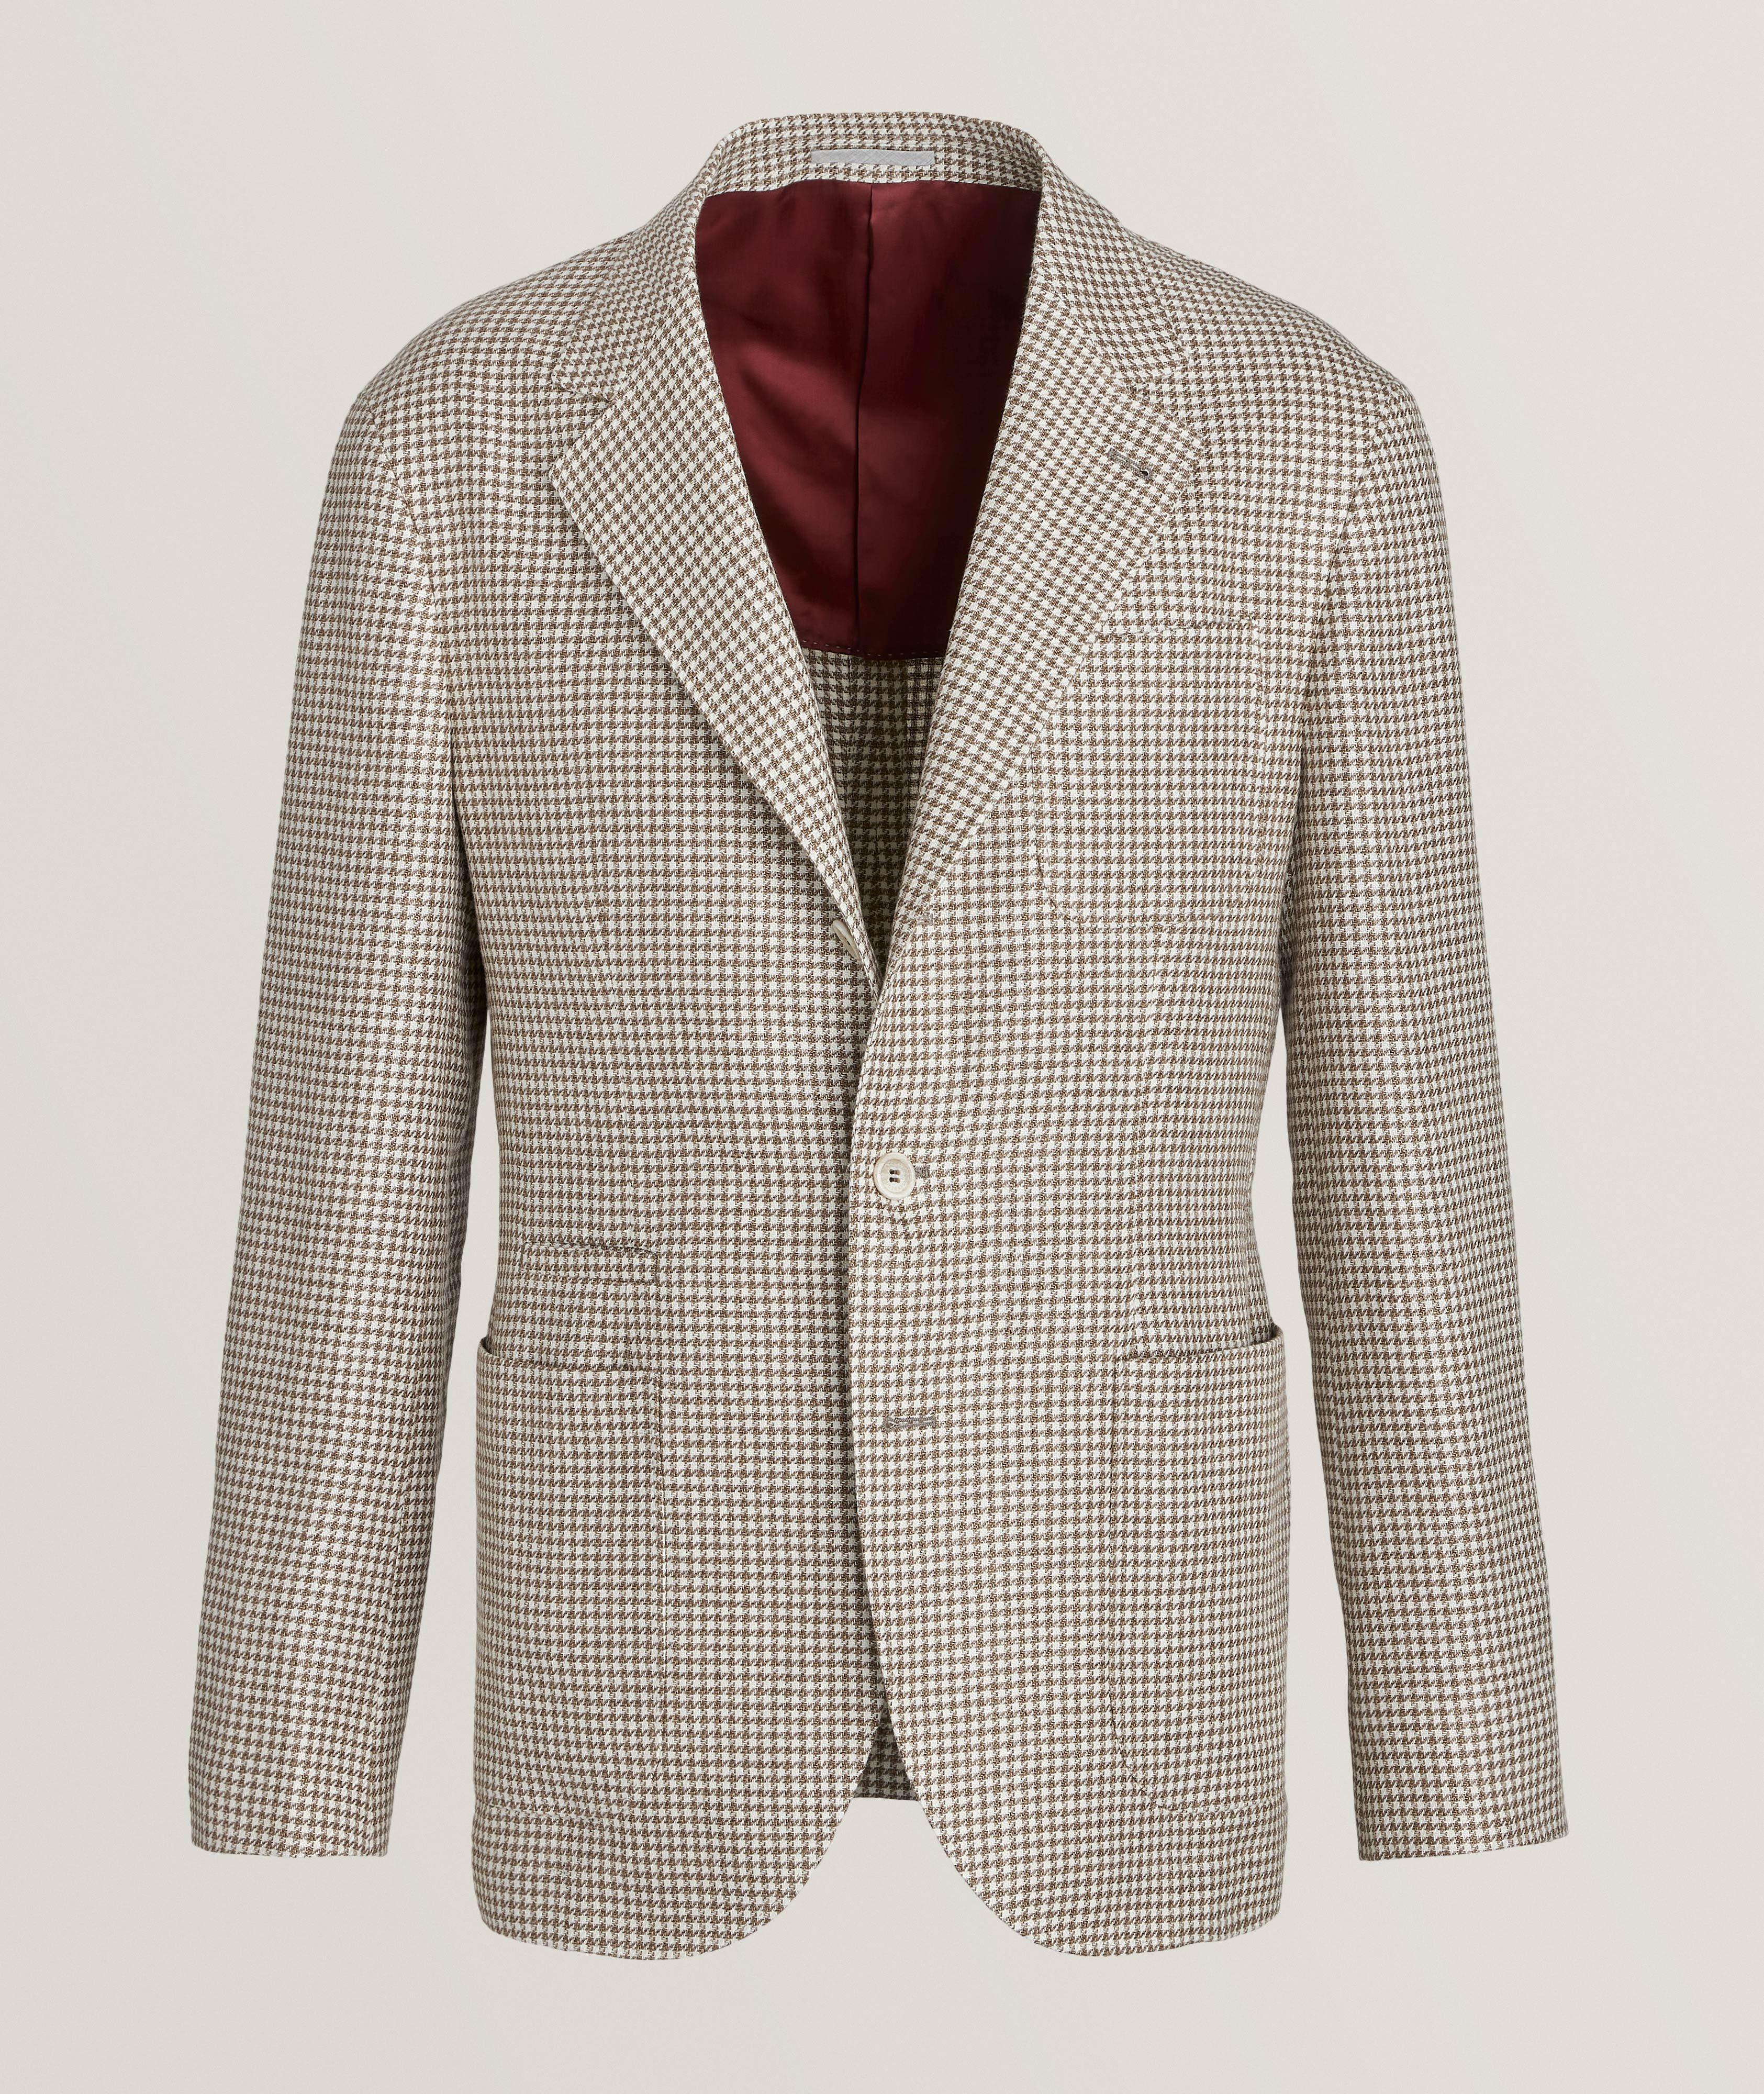 Houndstooth Linen, Wool & Silk Sport Jacket image 0